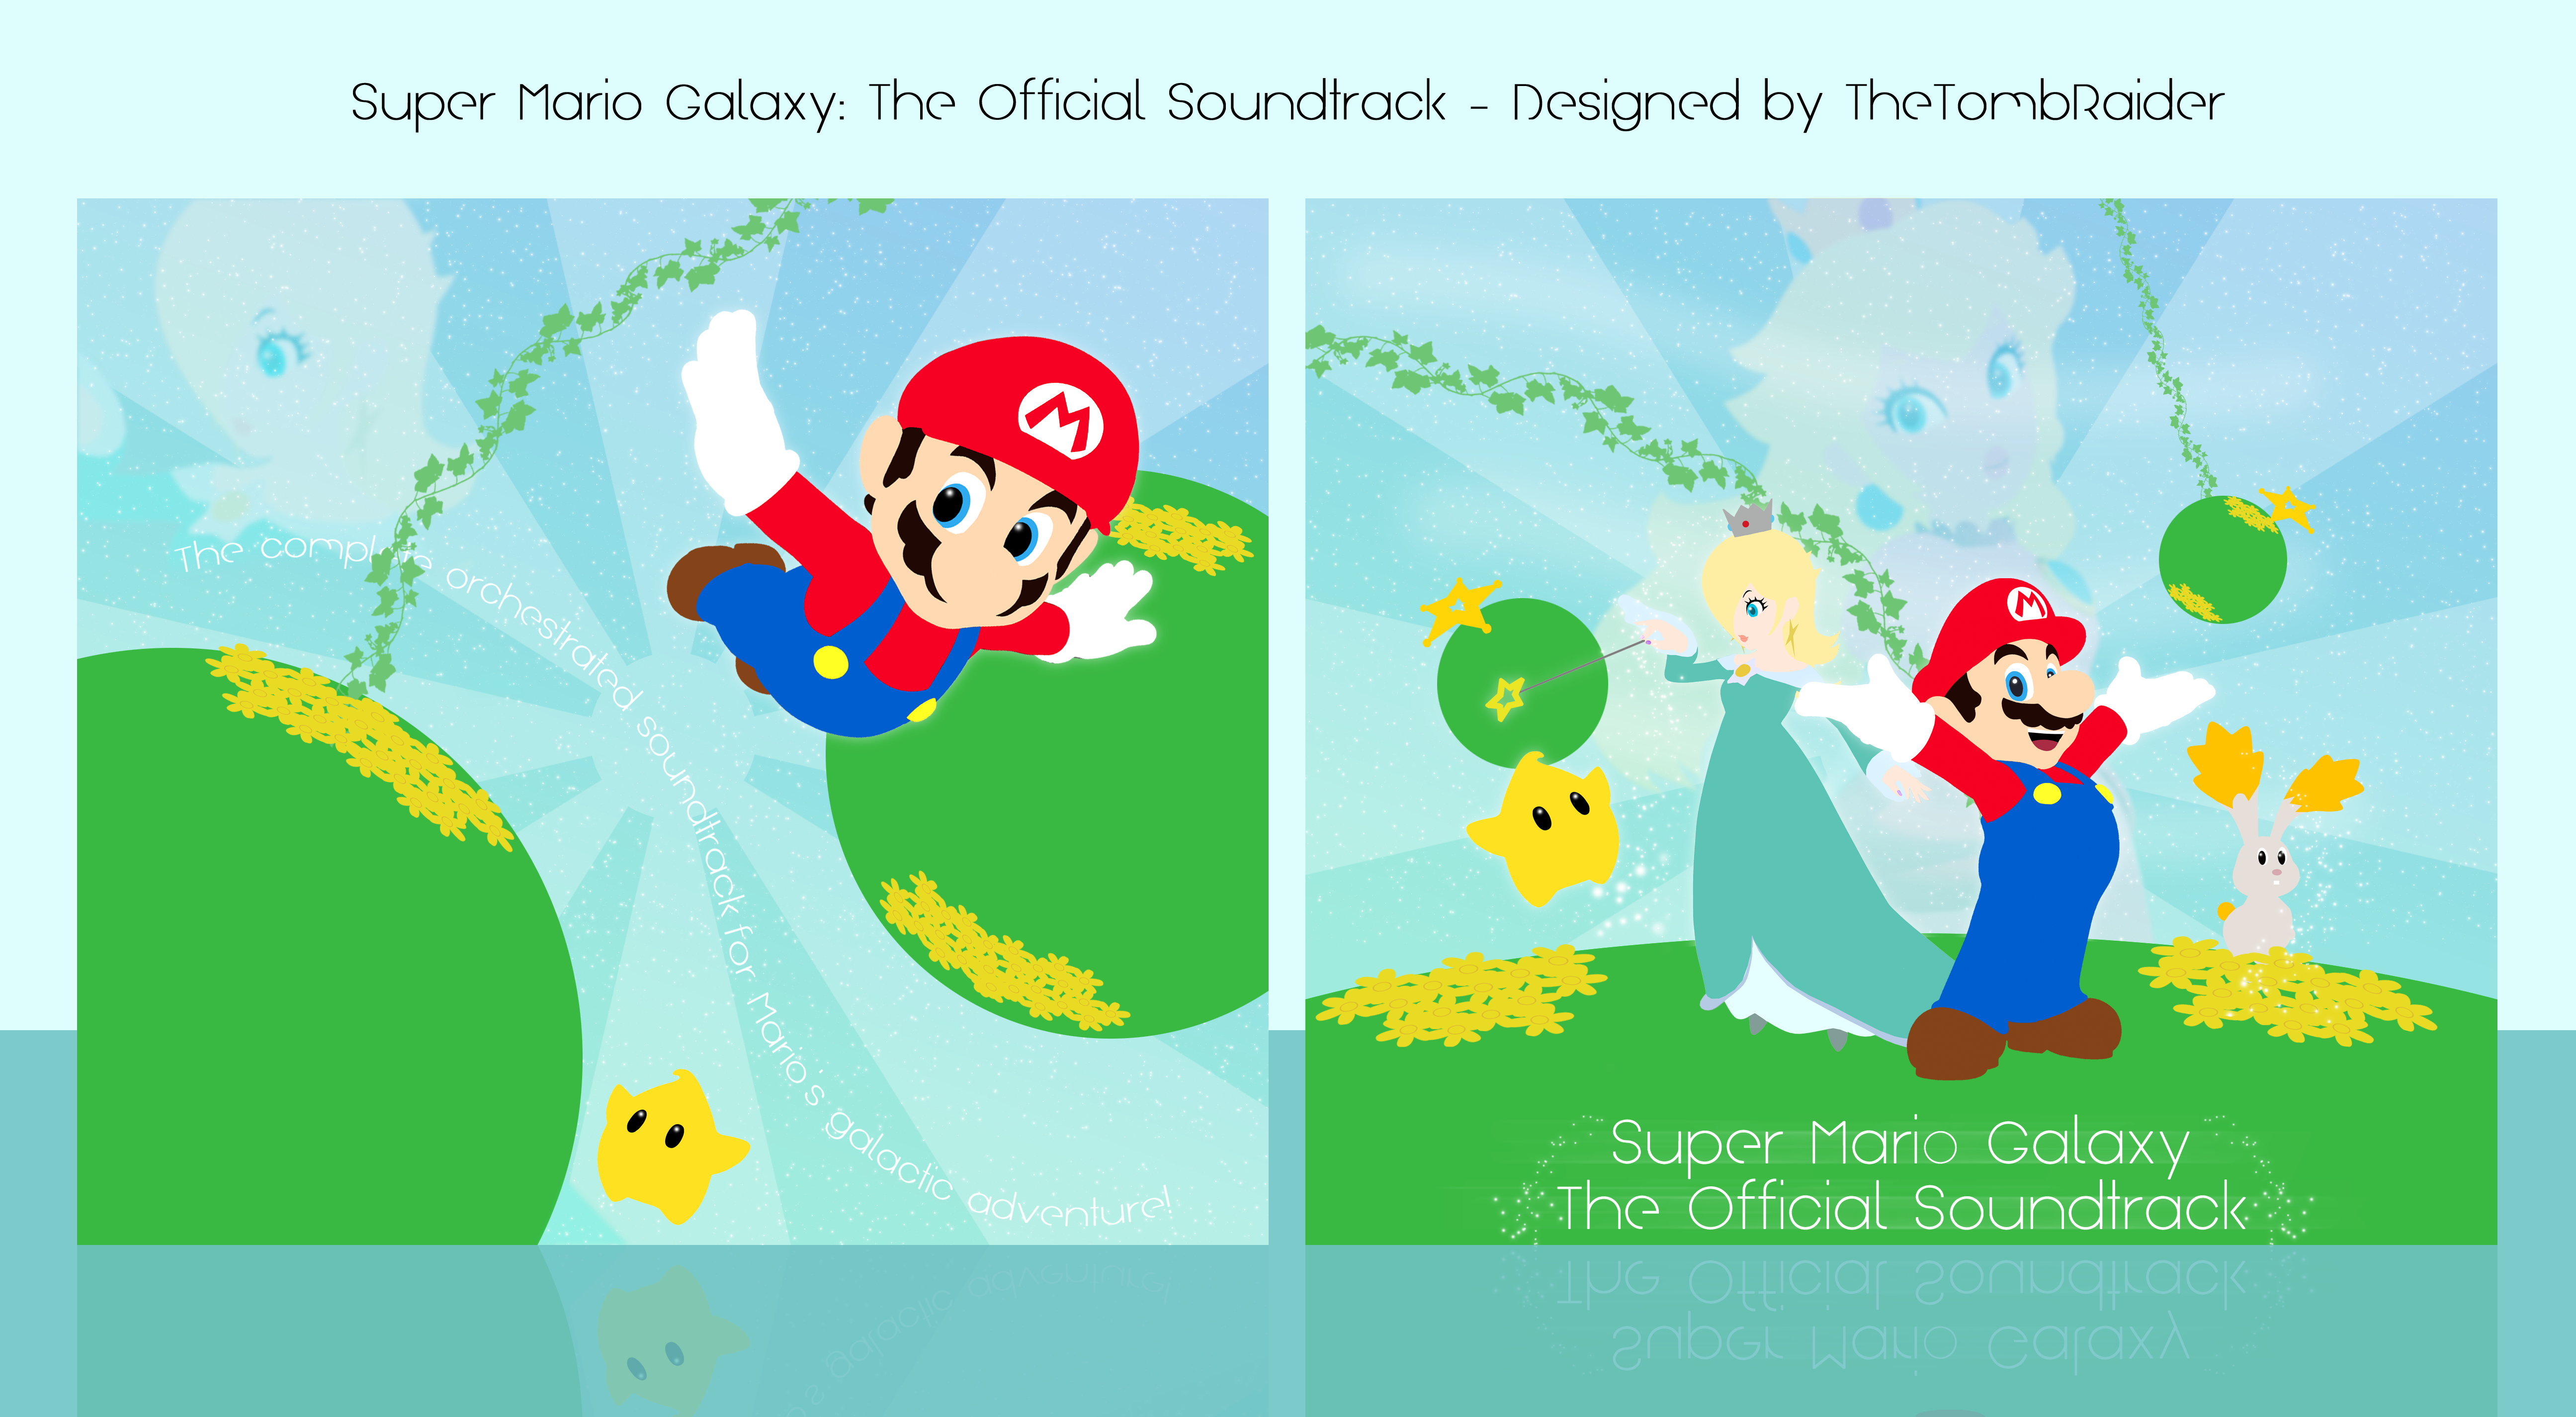 Super Mario Galaxy: The Official Soundtrack box cover